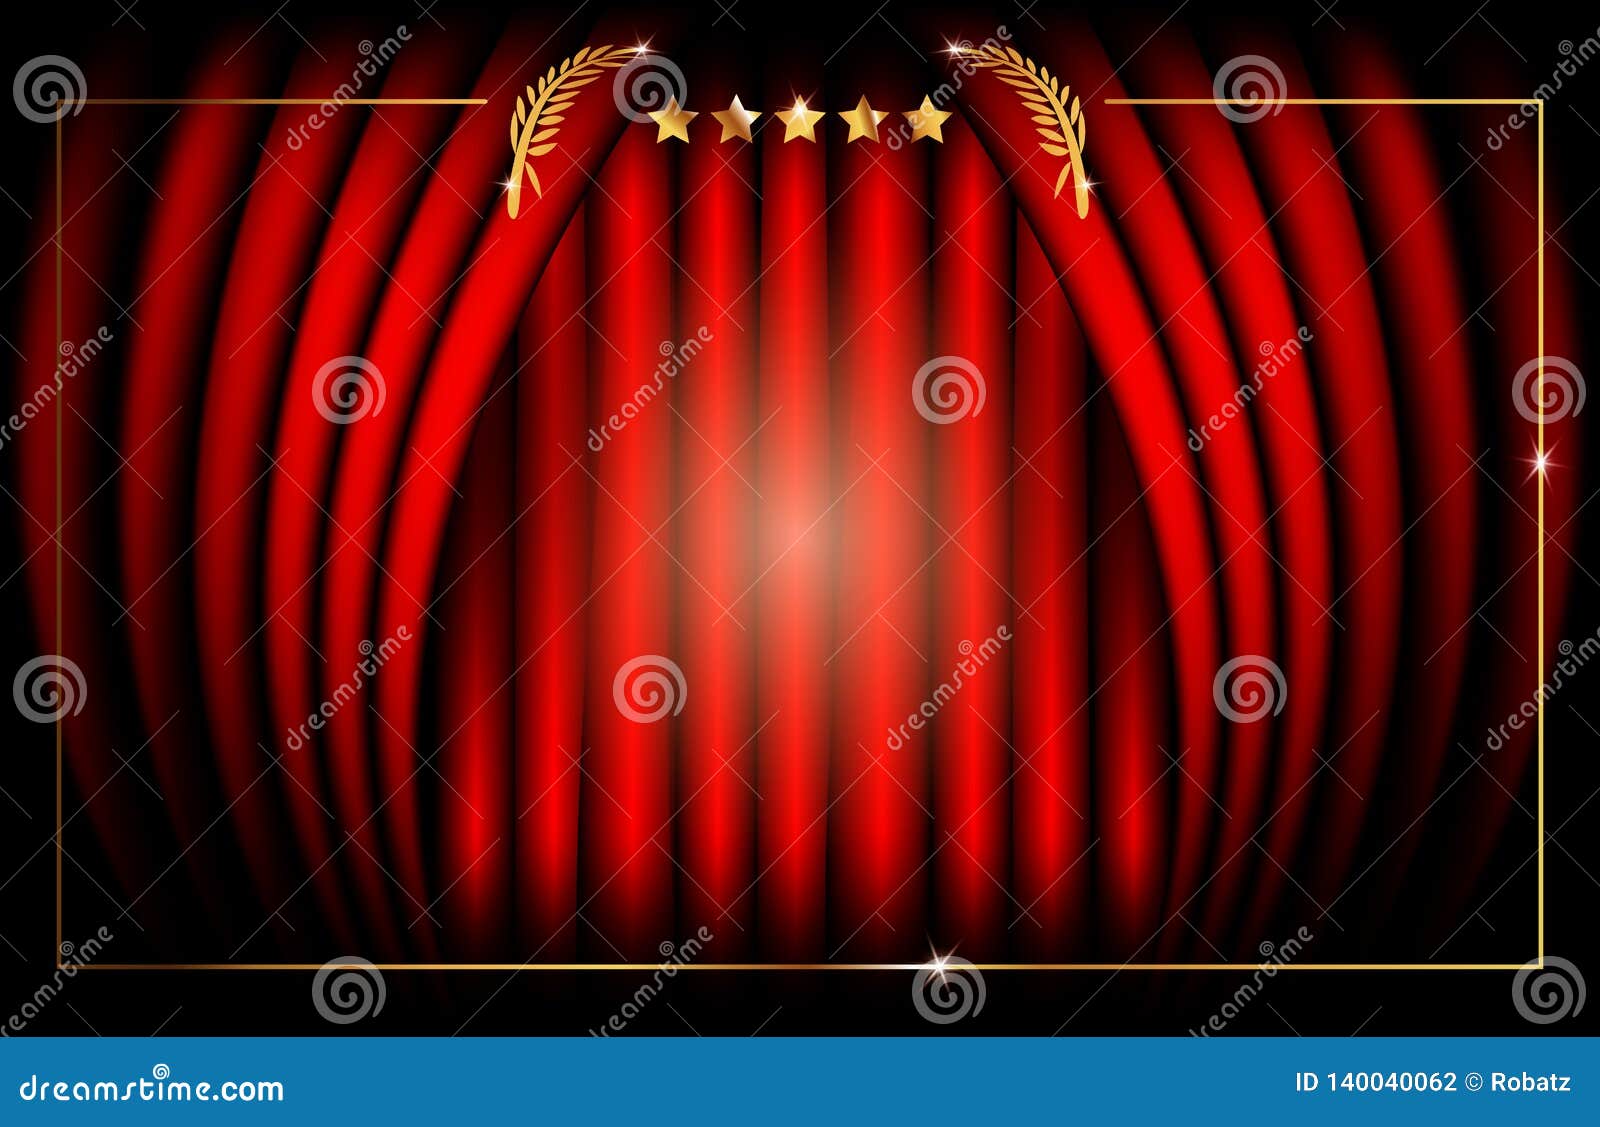 oscar template concept,   abstract golden stars frame logo icon, red carpet cinema films concept